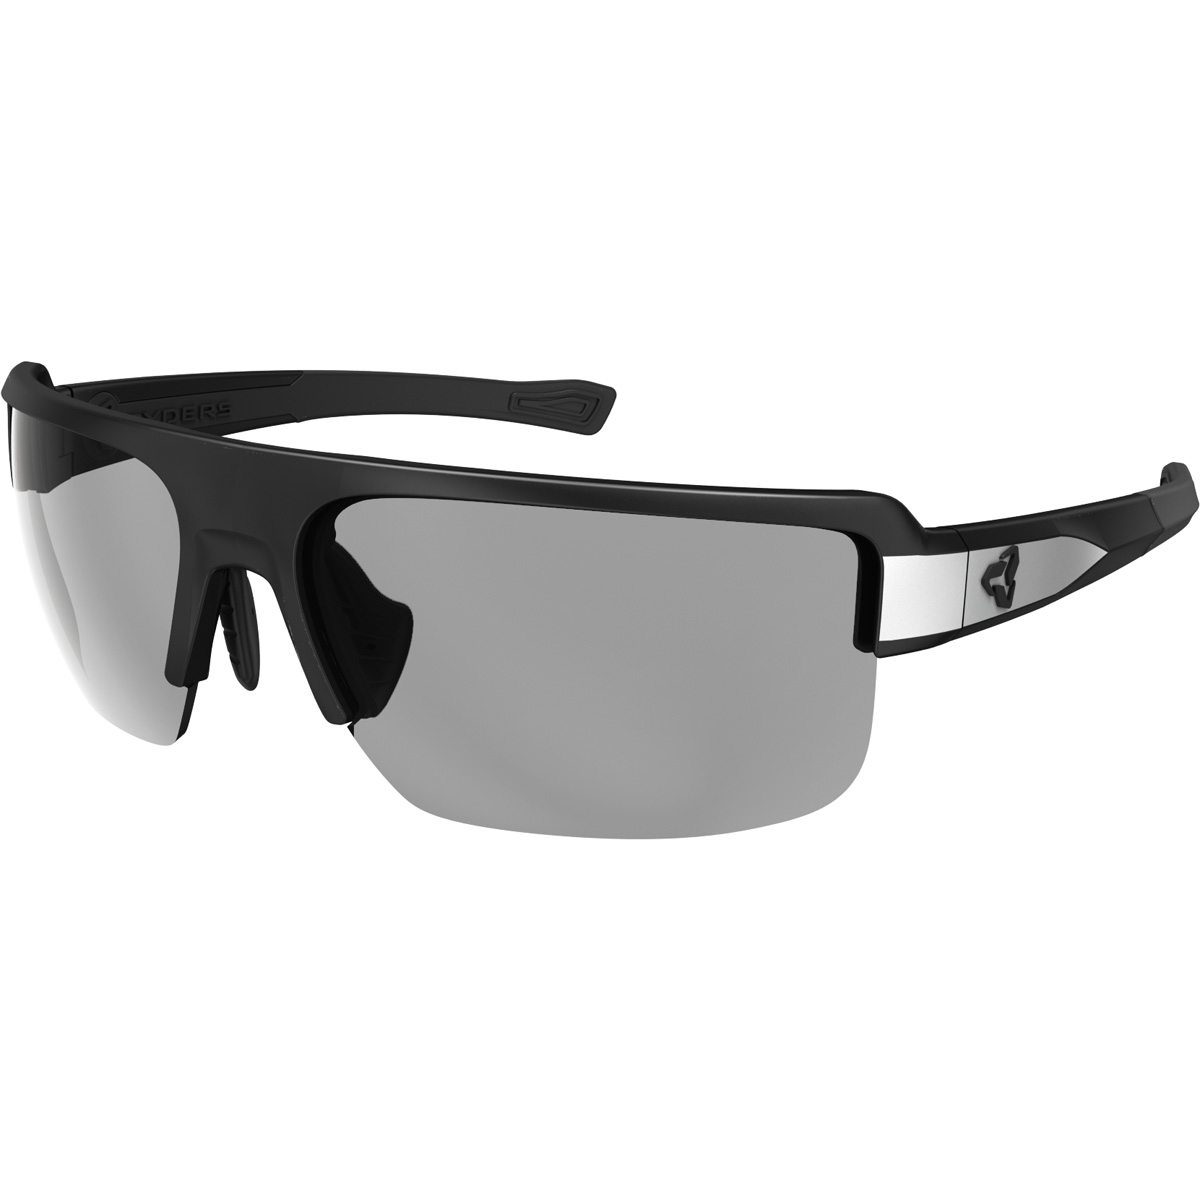 Seventh VeloPolar AntiFog Sunglasses - image 1 of 1